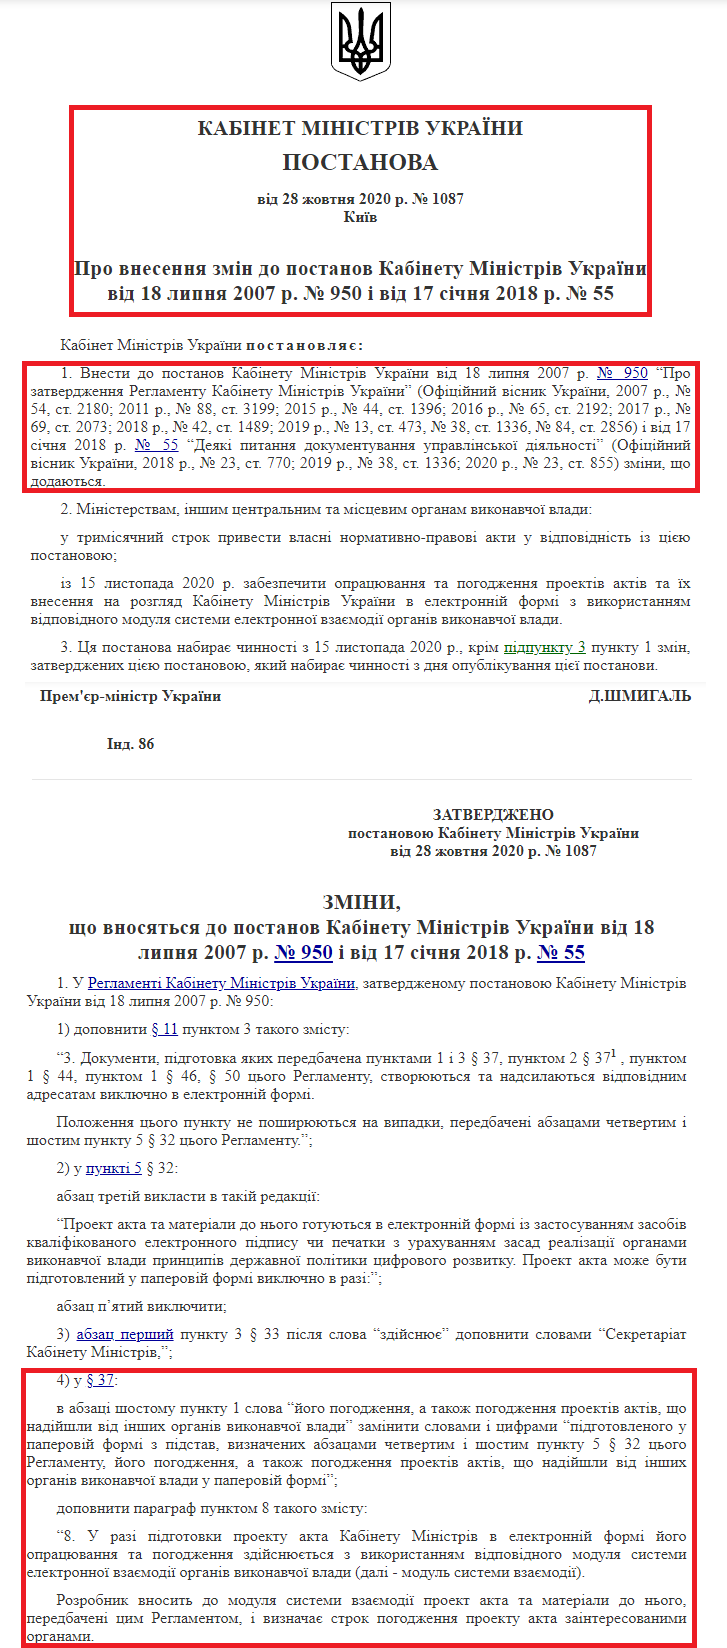 https://zakon.rada.gov.ua/laws/show/1087-2020-%D0%BF#Text